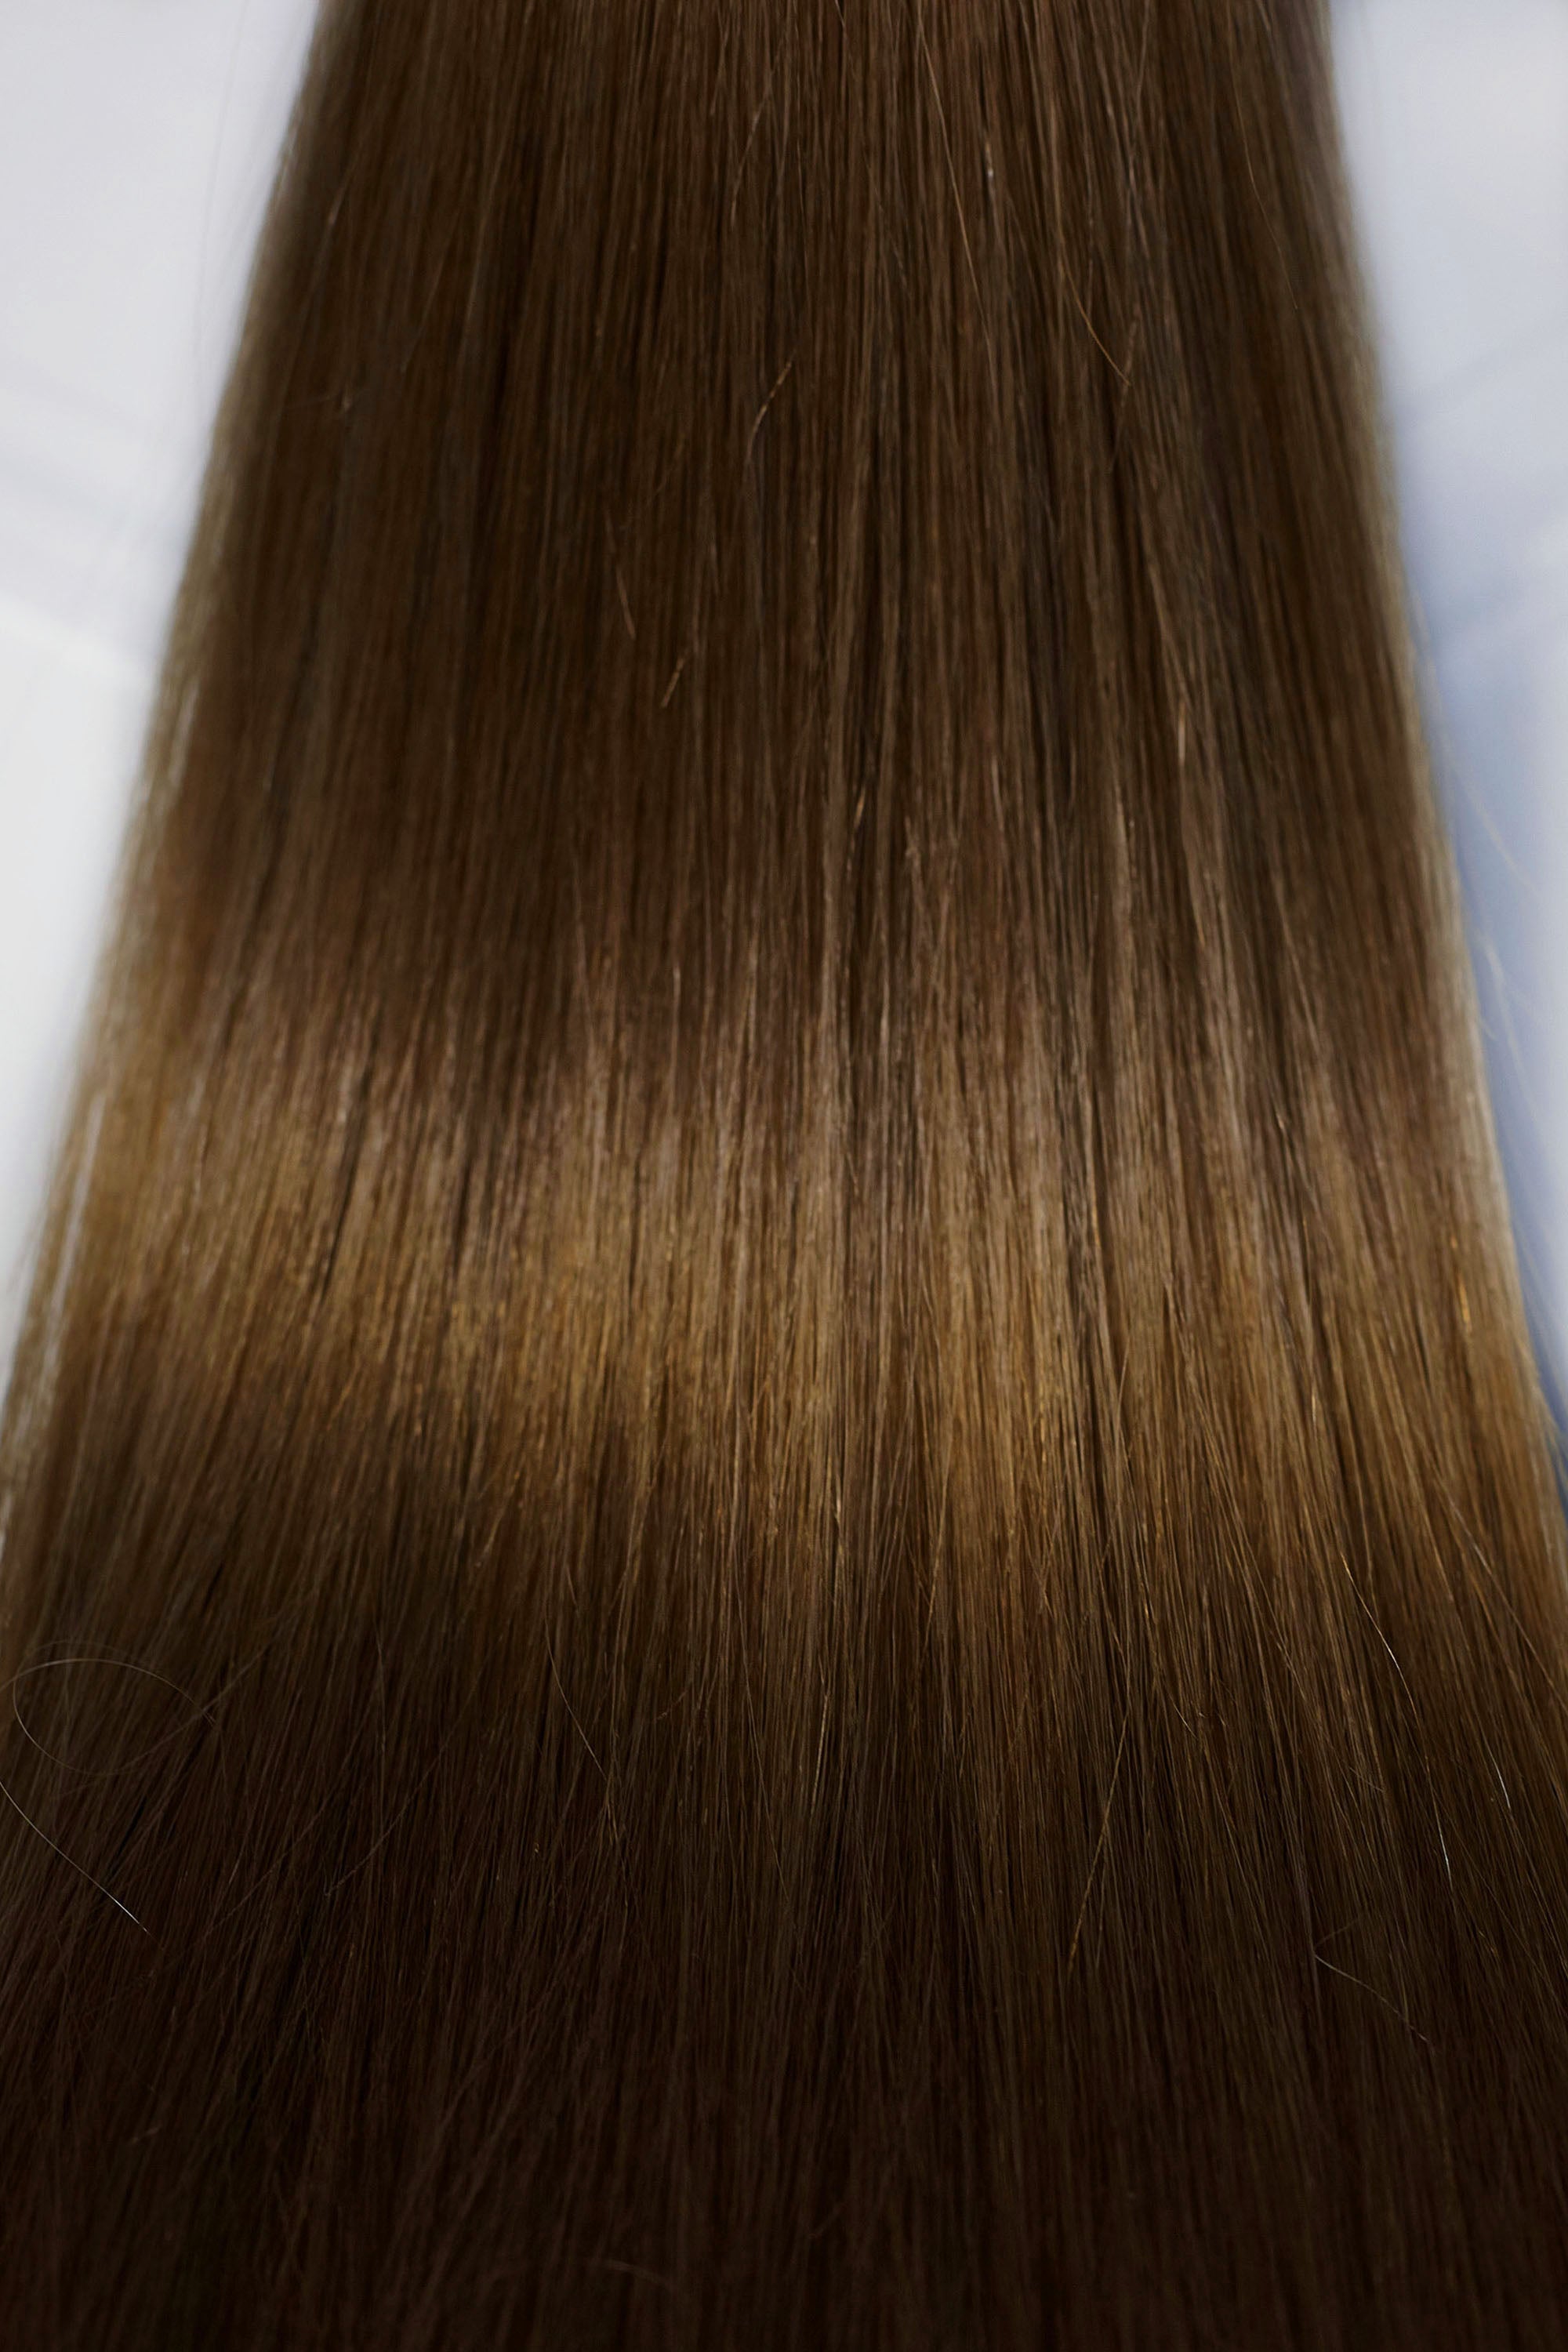 Behair professional Bulk hair "Premium" 16" (40cm) Natural Straight Honey Walnut Brown #5 - 25g hair extensions